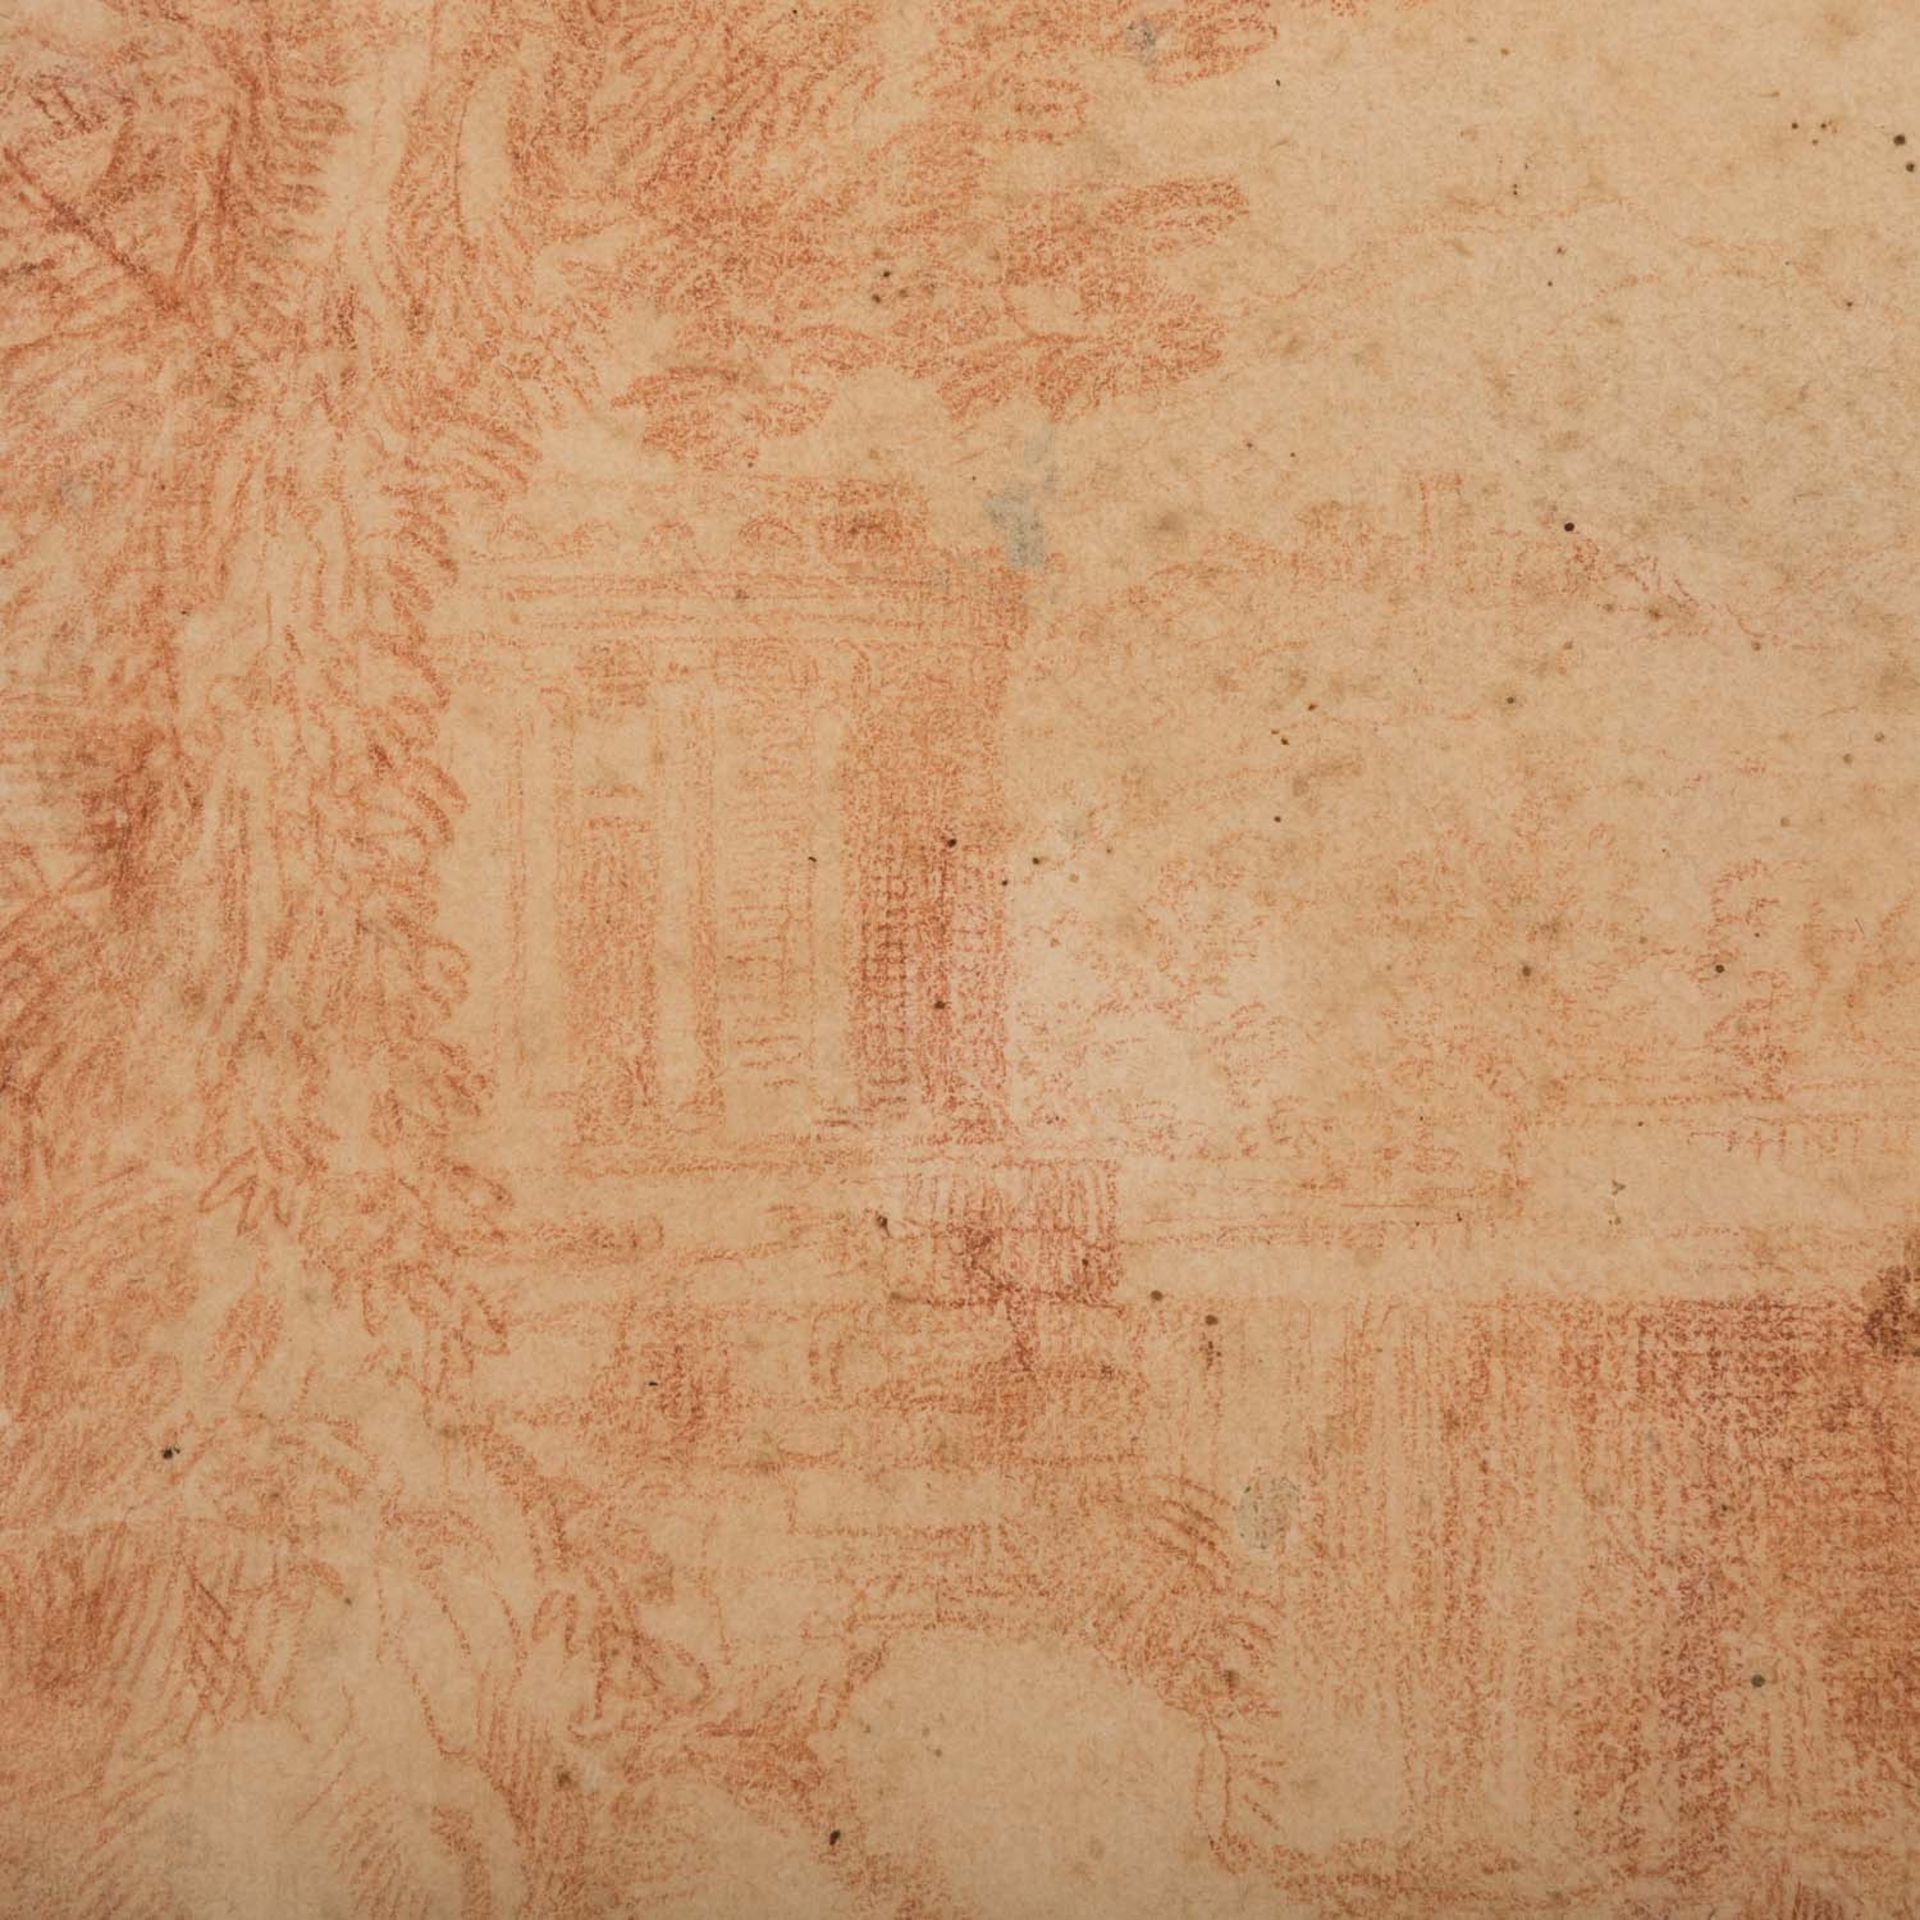 ROBERT, Hubert, ATTRIBUIERT (1733 - 1808), "Landschaftscapriccio mit Tempelruinen", Mitte 18. Jh., - Bild 3 aus 6